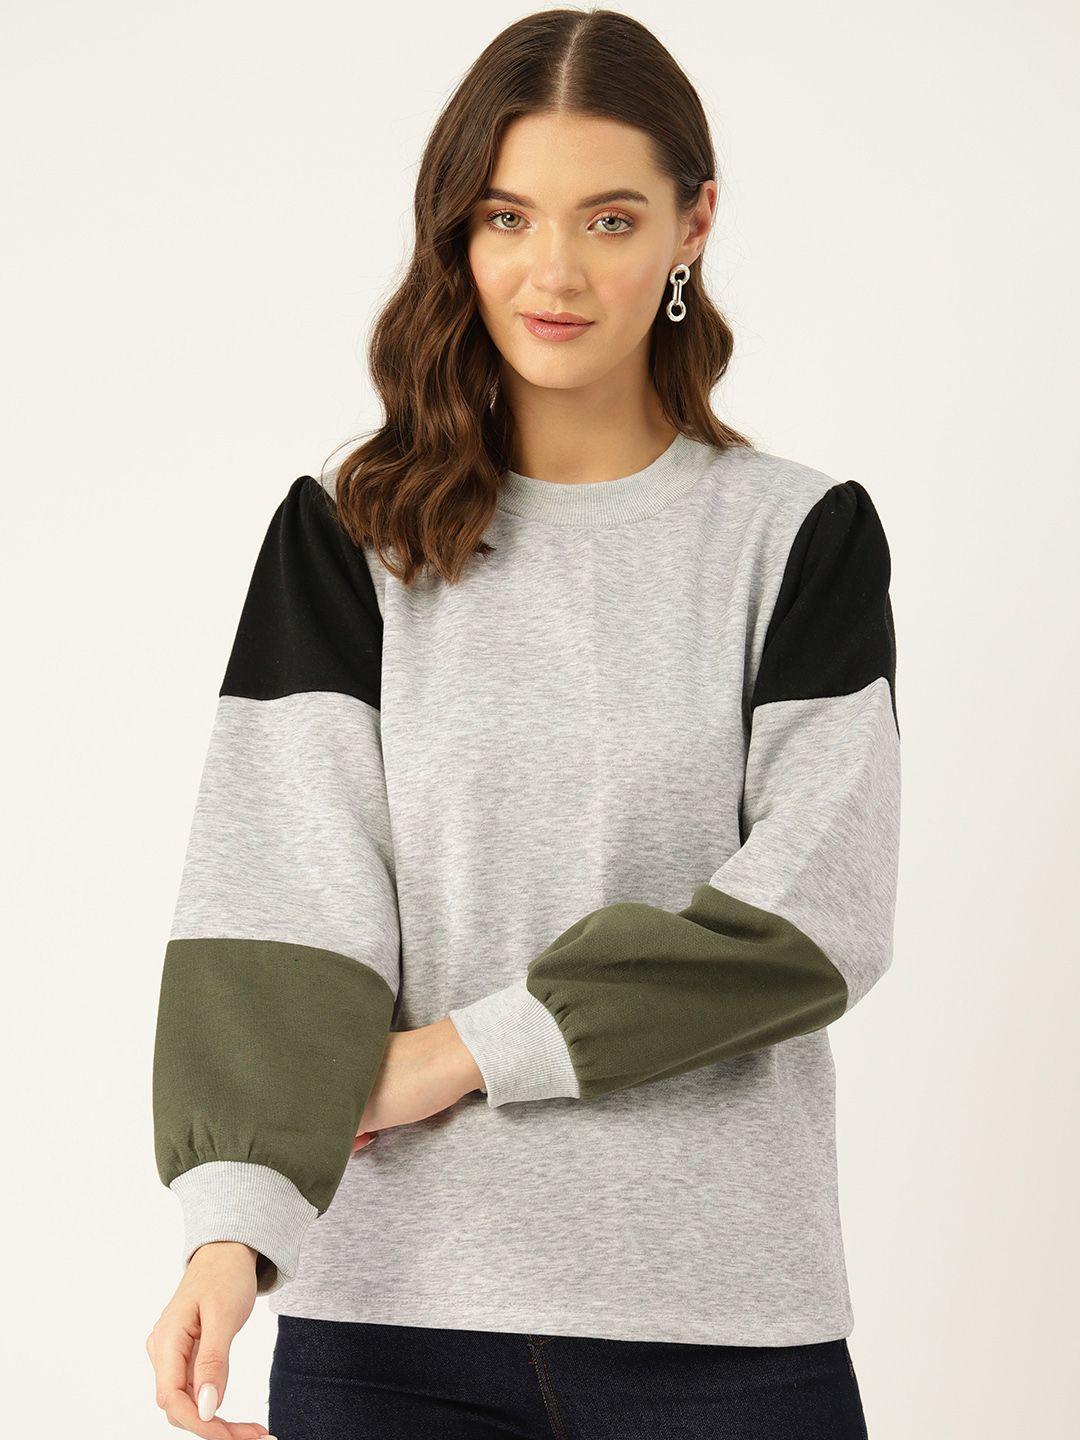 rue collection women colourblocked pullover sweatshirt